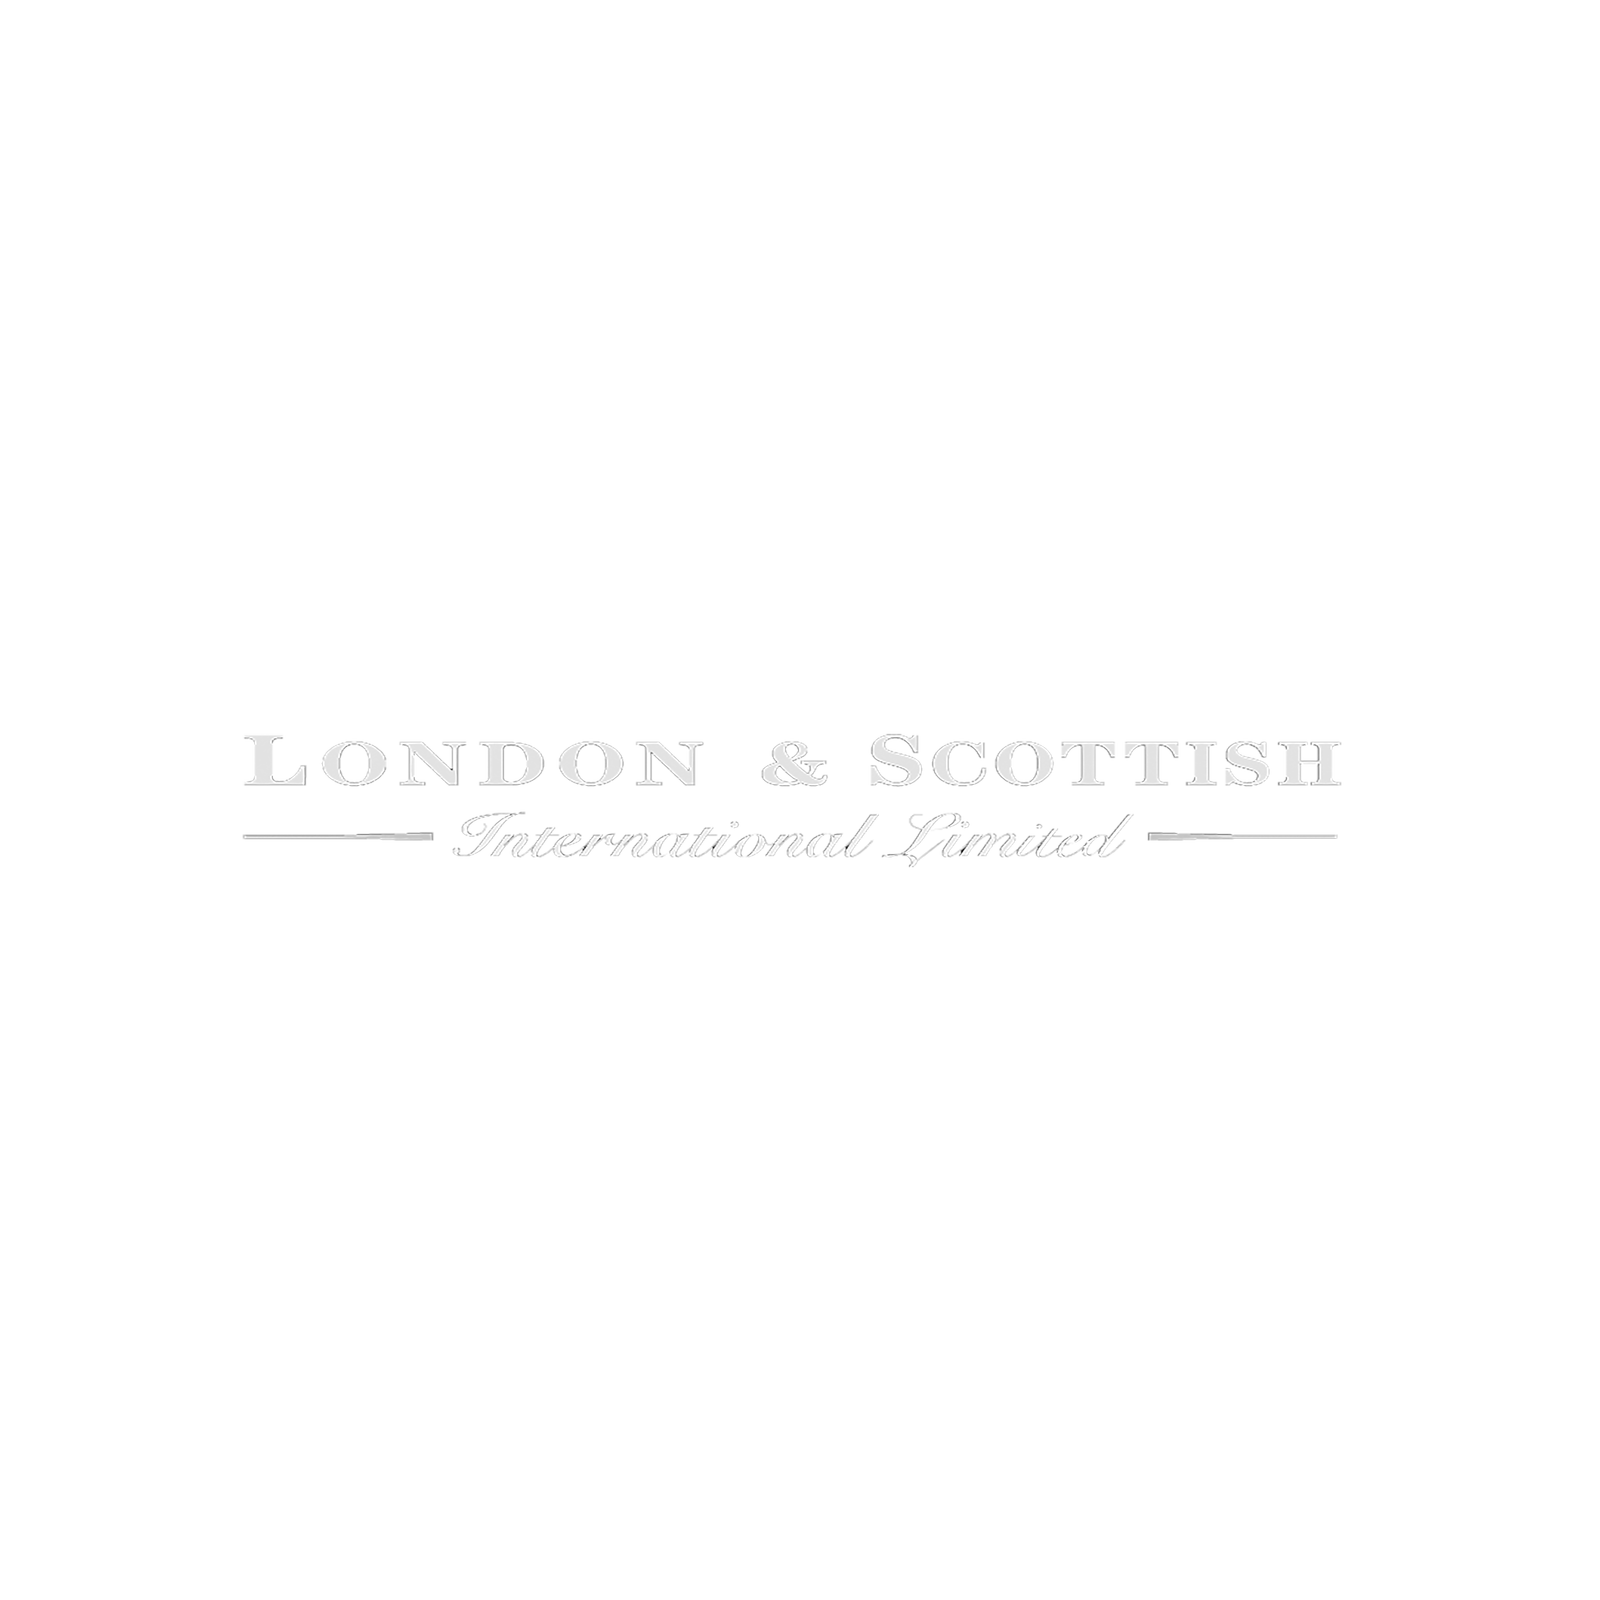 LONDON & SCOTTISH